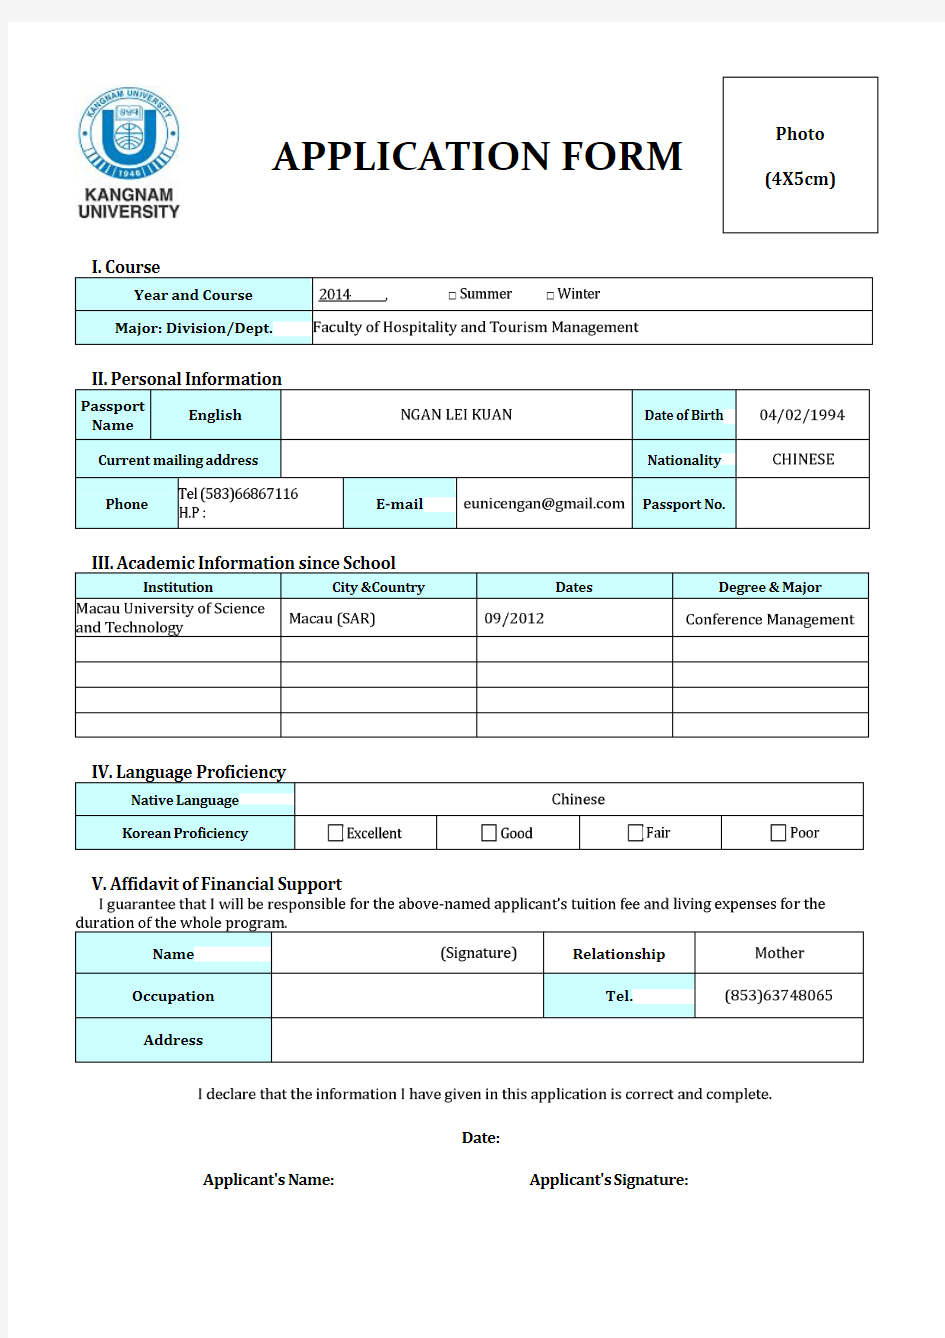 application form - 2014 (1)